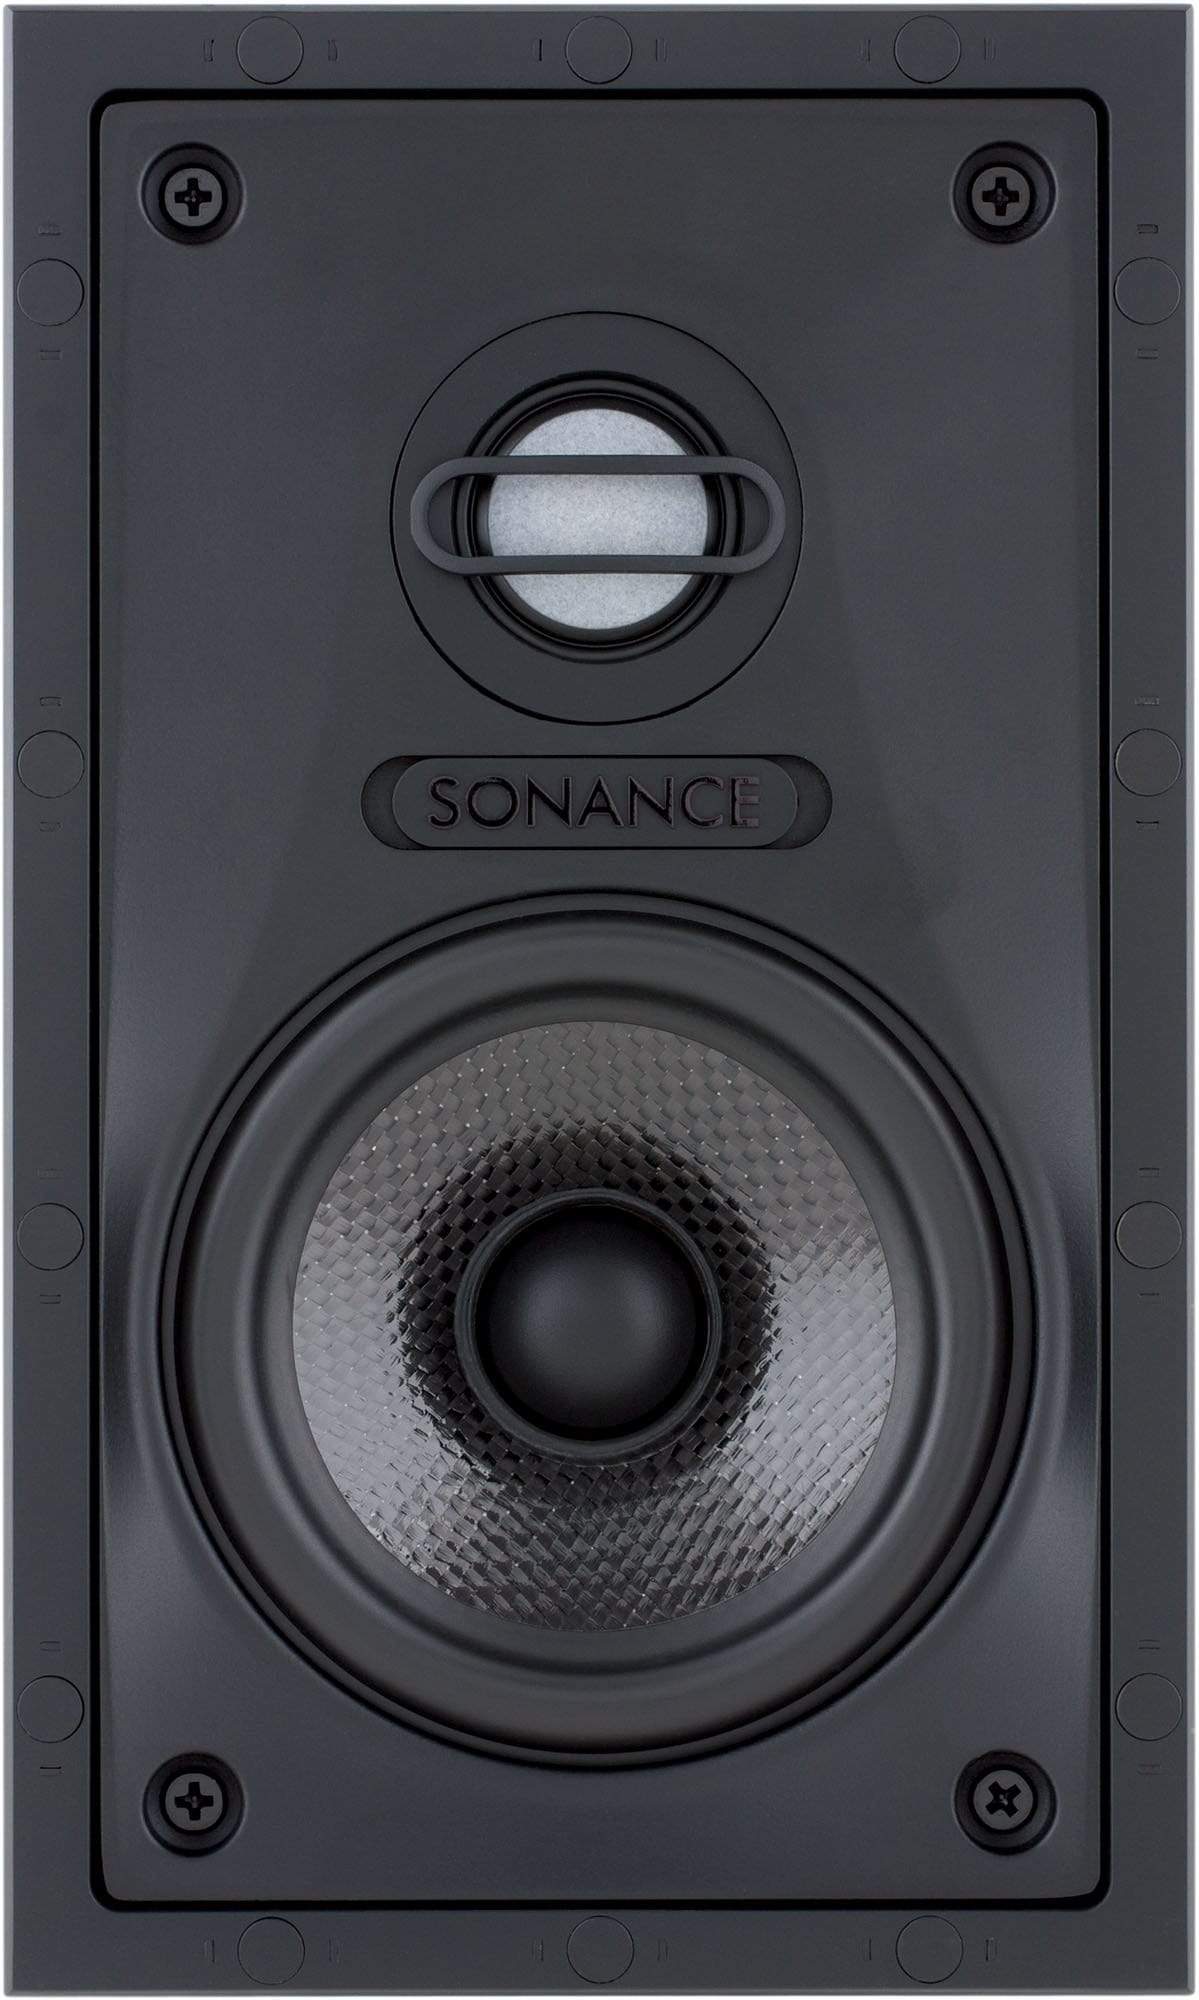 Sonance VP48 In-wall Speakers